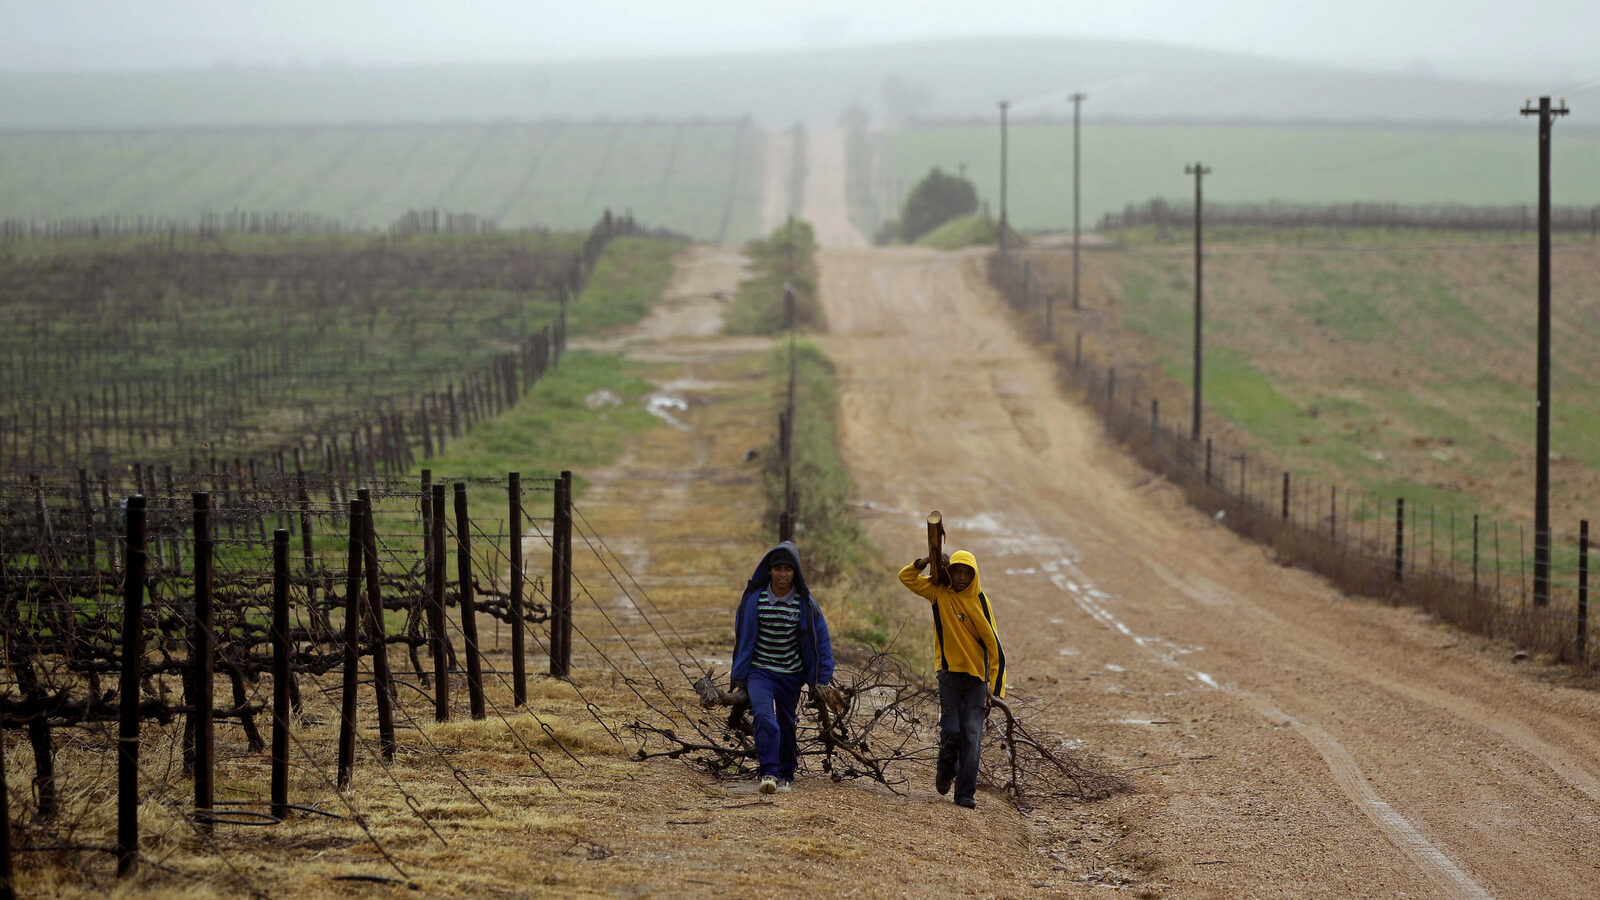 Farmworkers carry wood to heat their homes past a sprawling vineyard near Riebeek West, South Africa. Schalk van Zuydam | AP